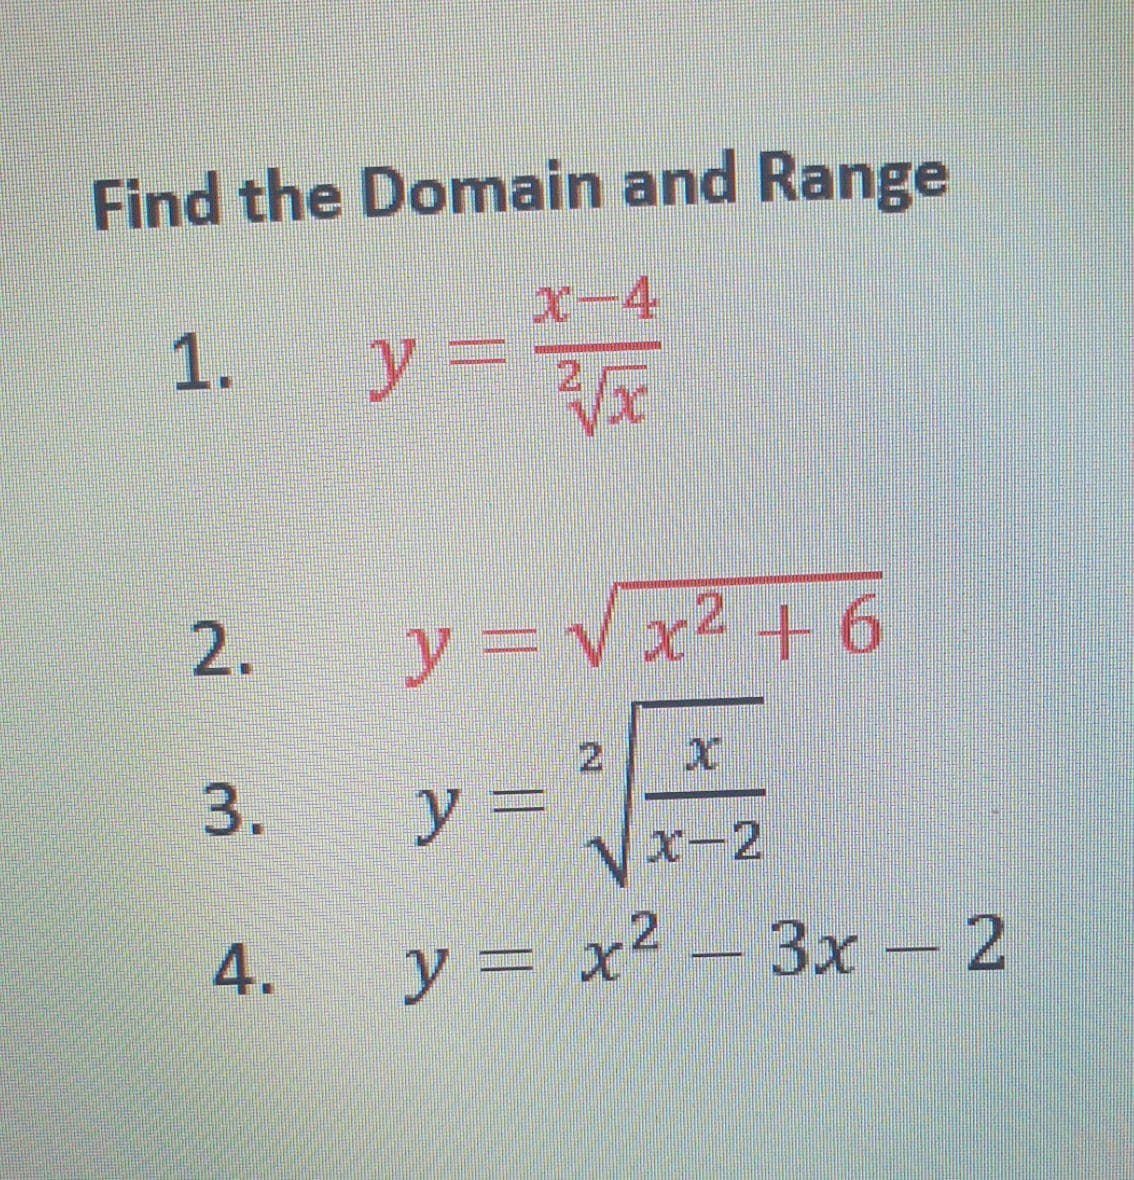 Find the Domain and Range
x-4
y 3=
1.
2.
y=Vx2 +6
21
3.
y
х—2
4.
y = x² – 3x - 2
Зх— 2
